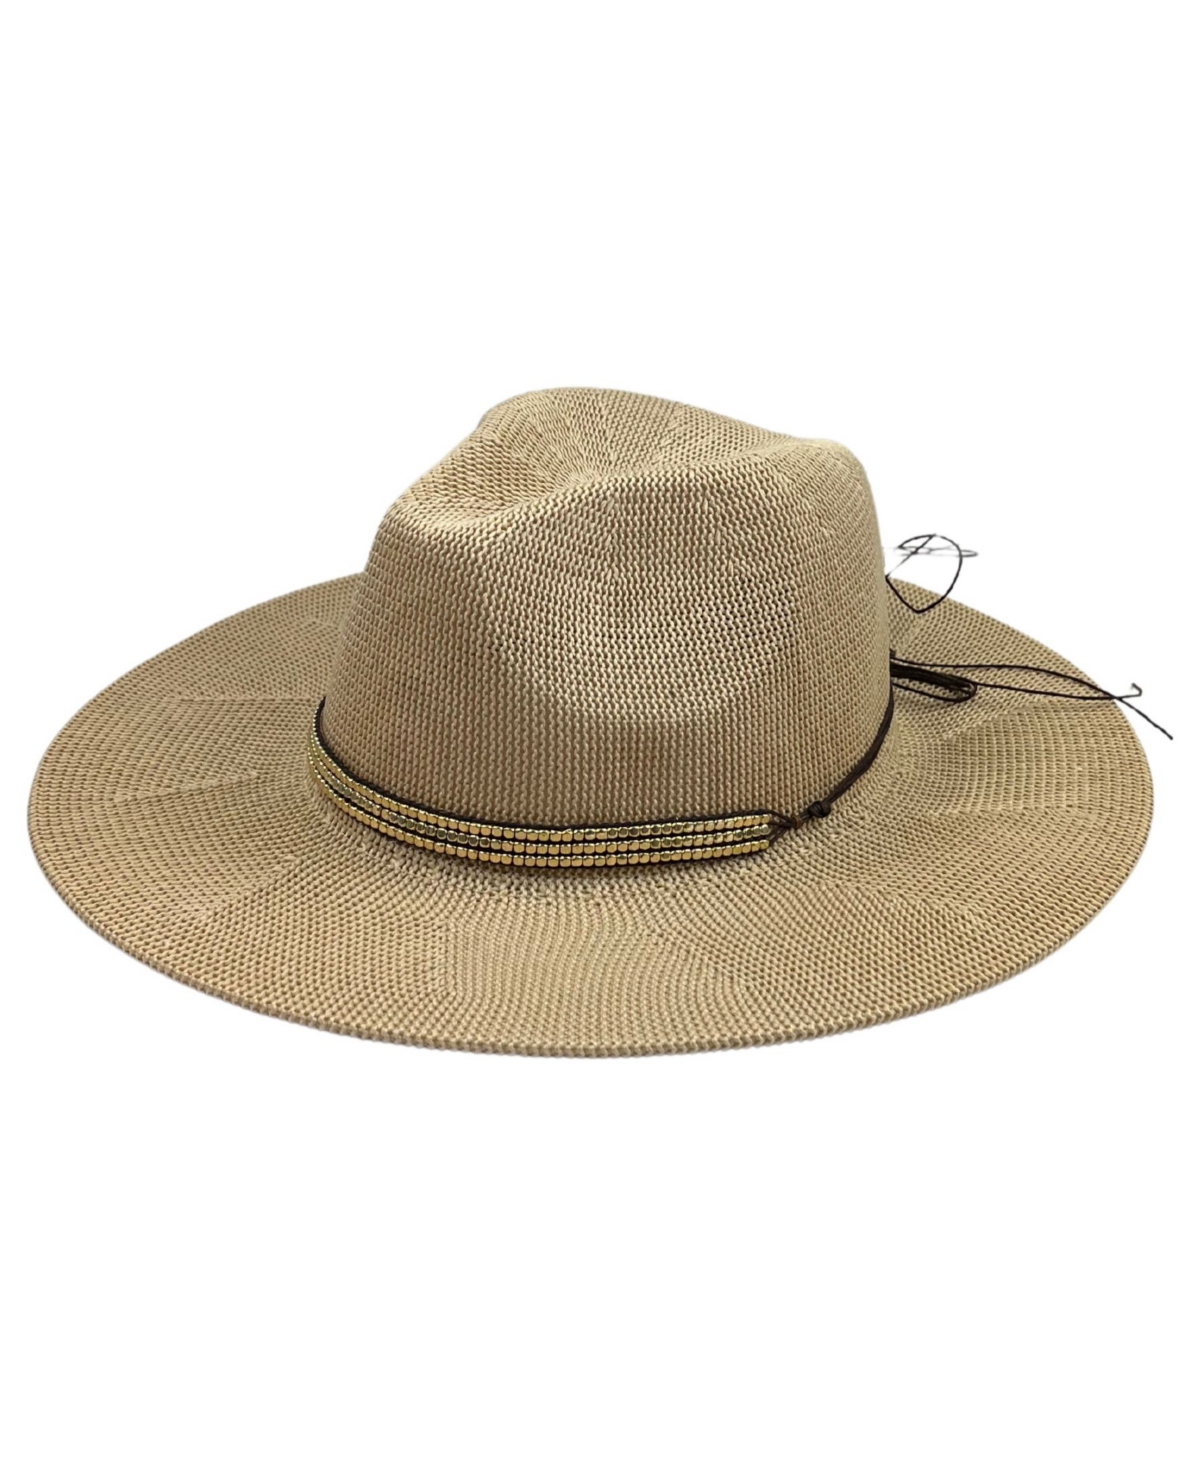 Marcus Adler Women's Packable Panama Hat With Beaded Trim In Tan